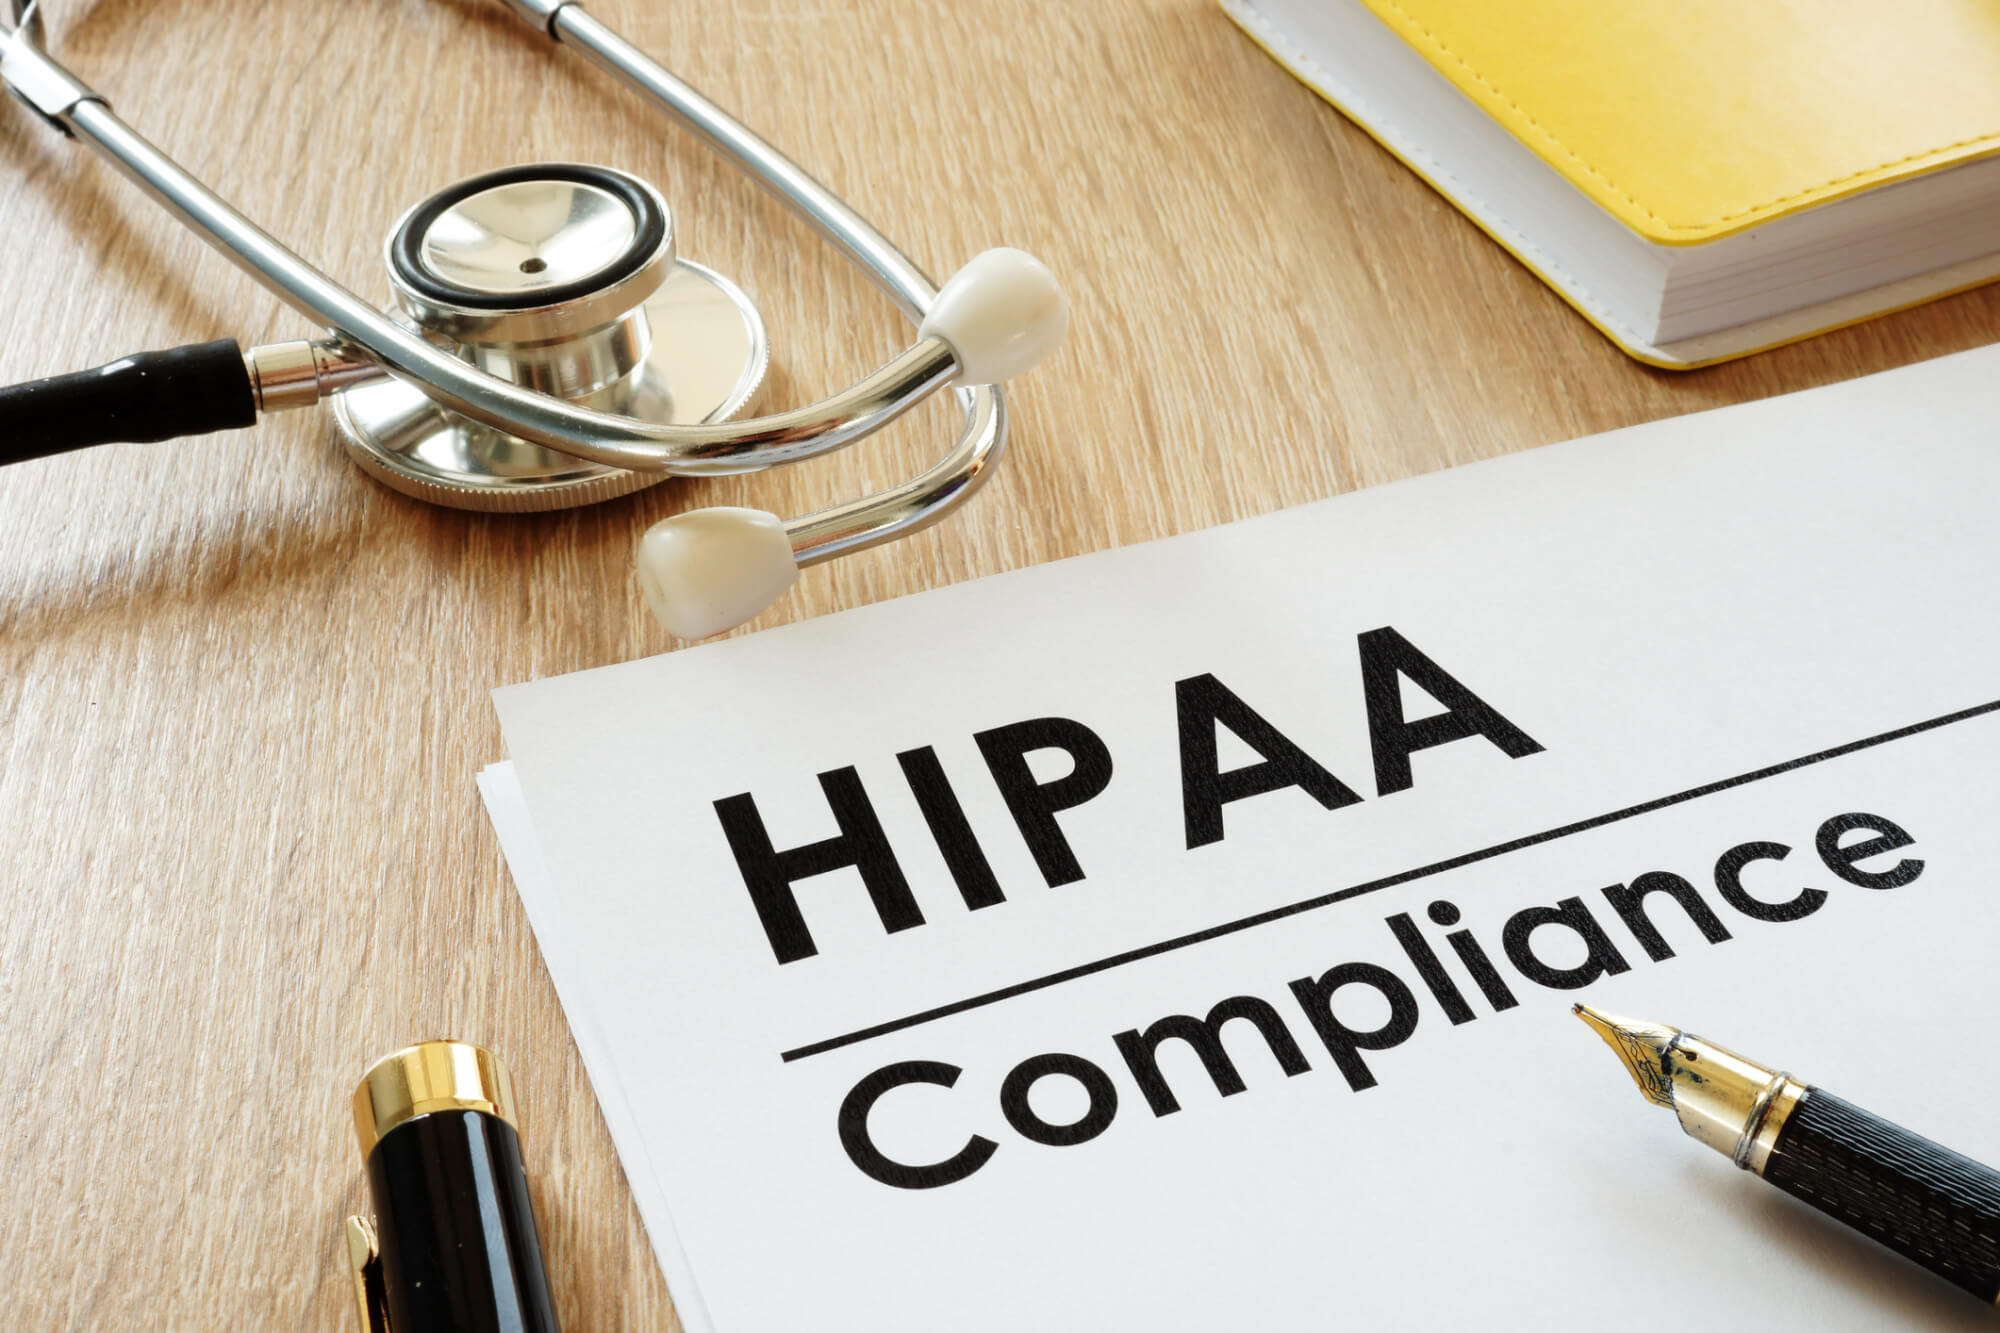 HIPAA Compliance application and stethoscope on a desk.